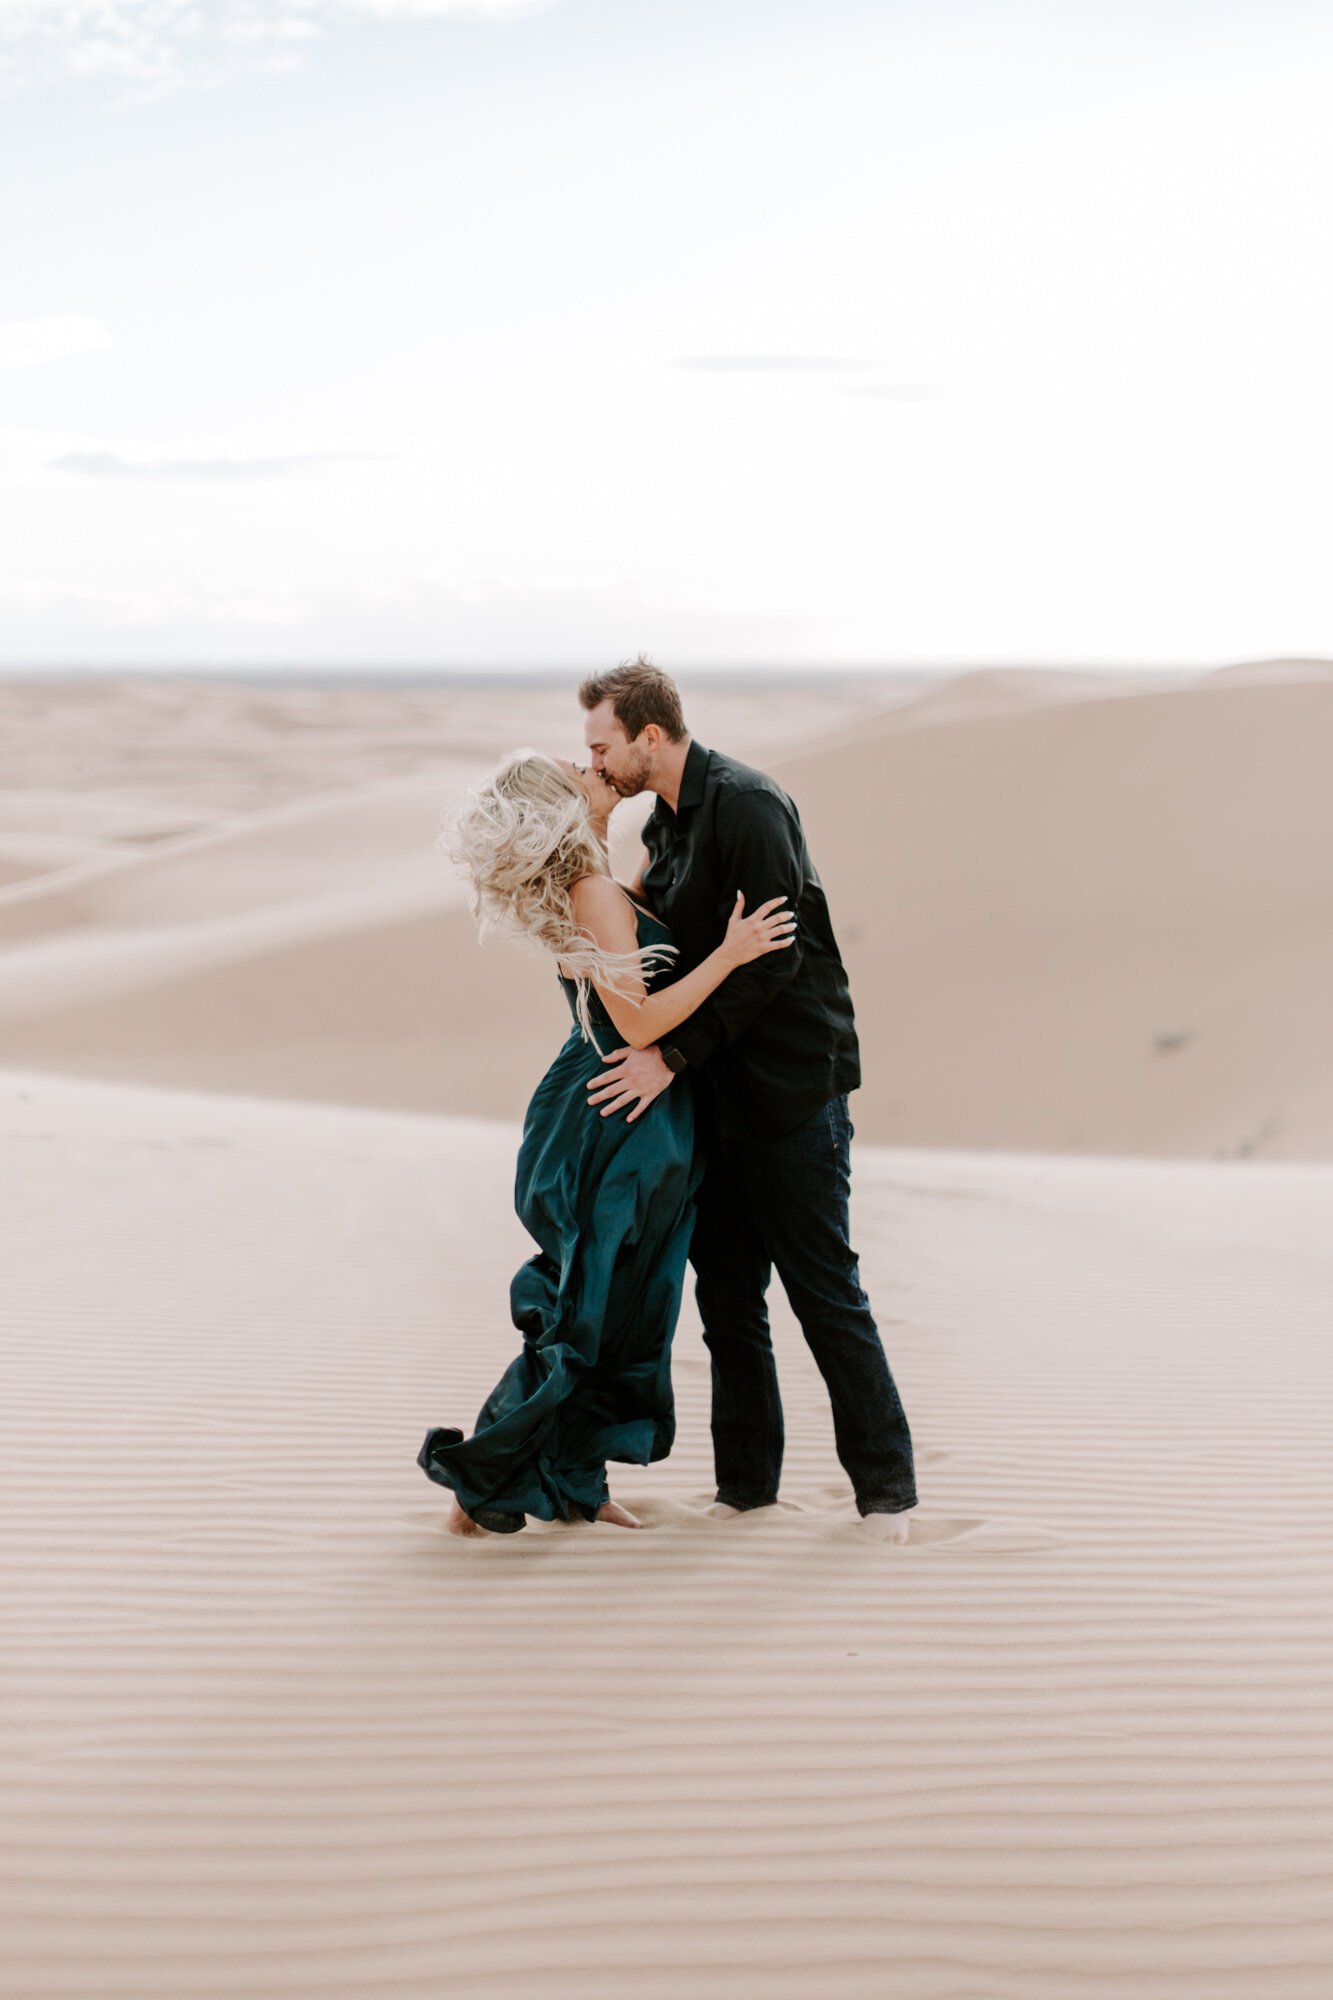 Glamis Sand dune engagement session, engagment photography, Kara Reynolds wedding photograher_-3.jpg